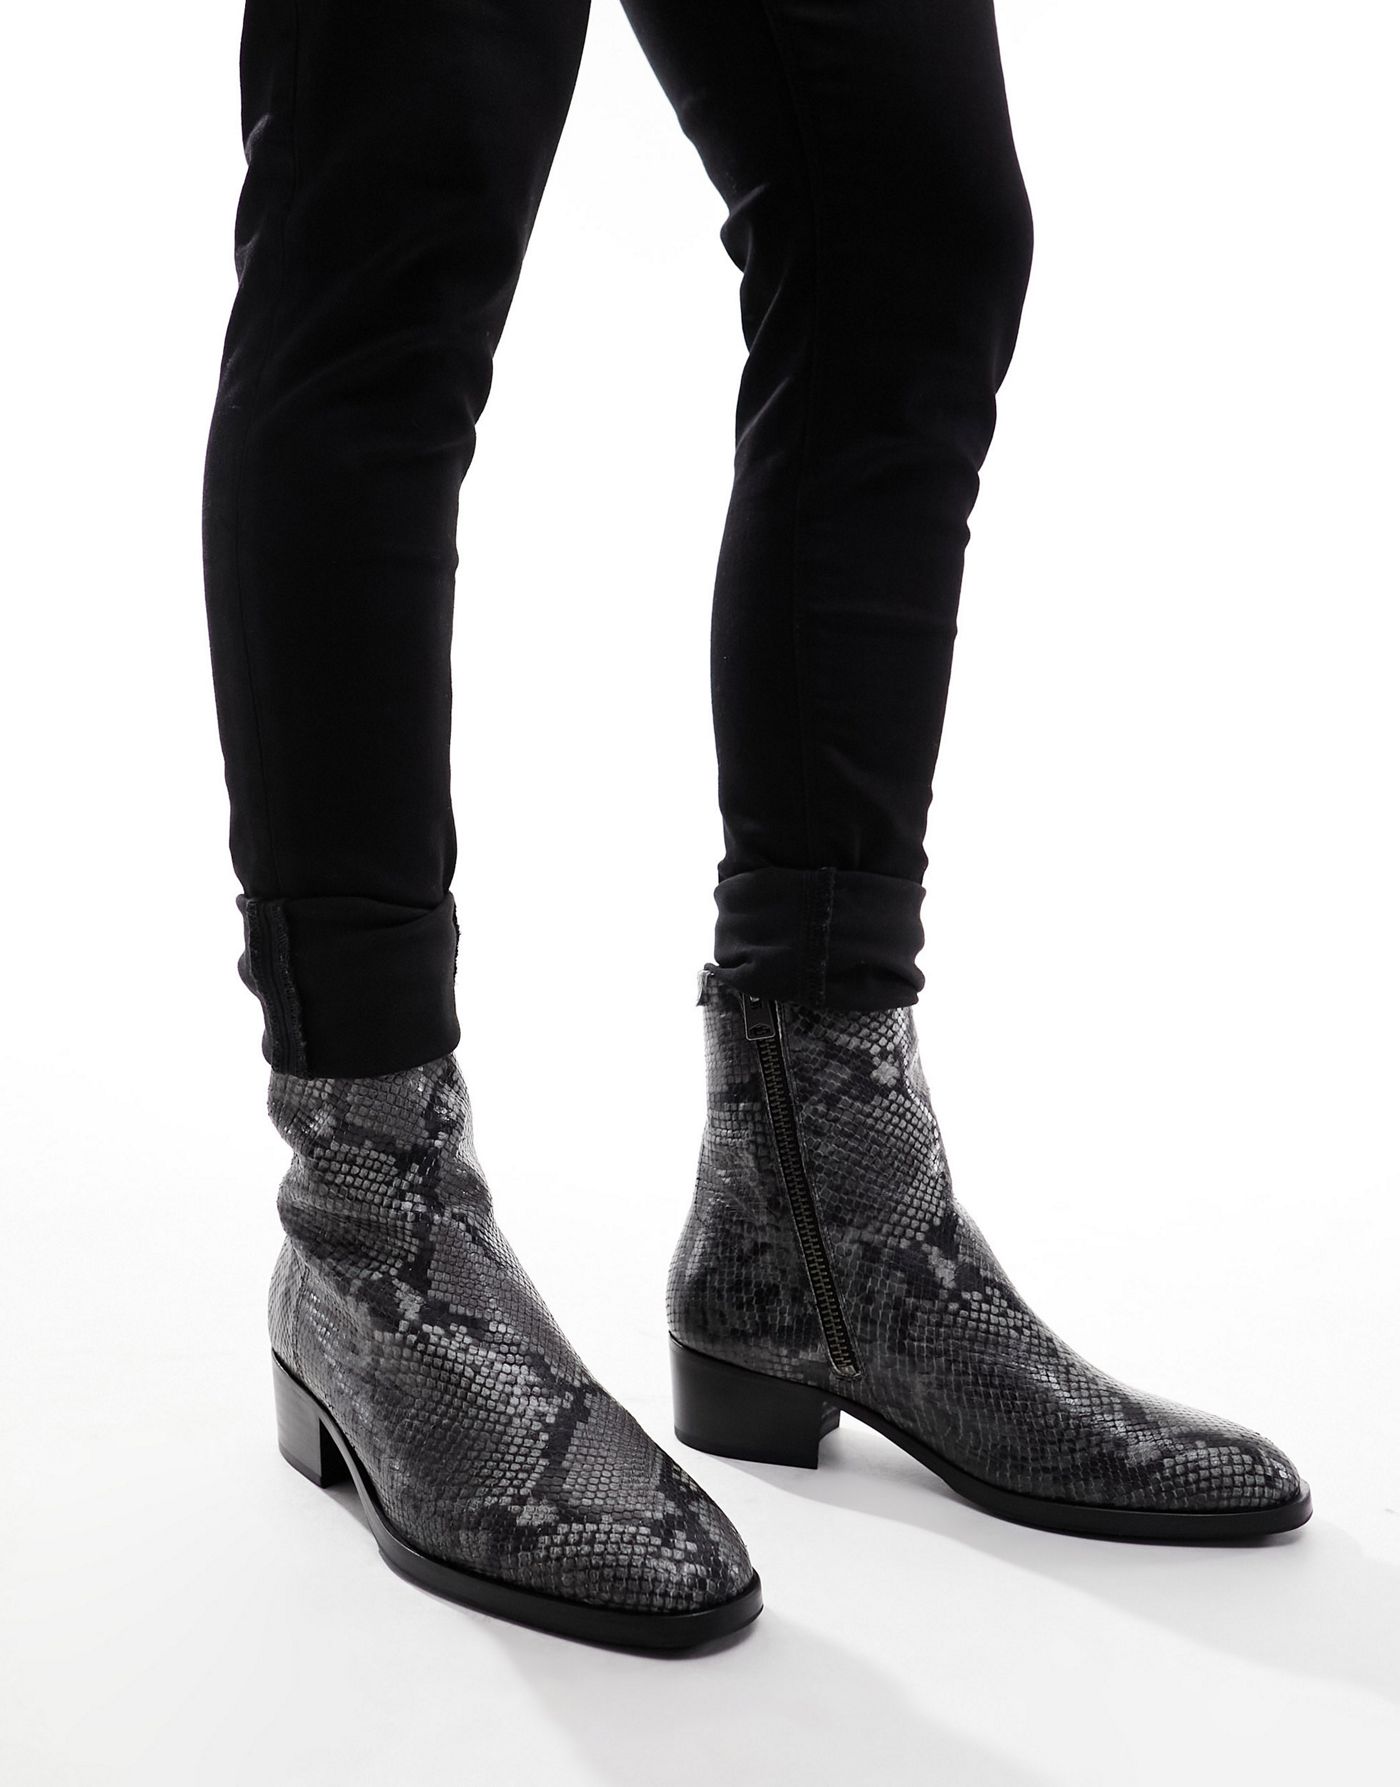 AllSaints Bonham leather boots in snake